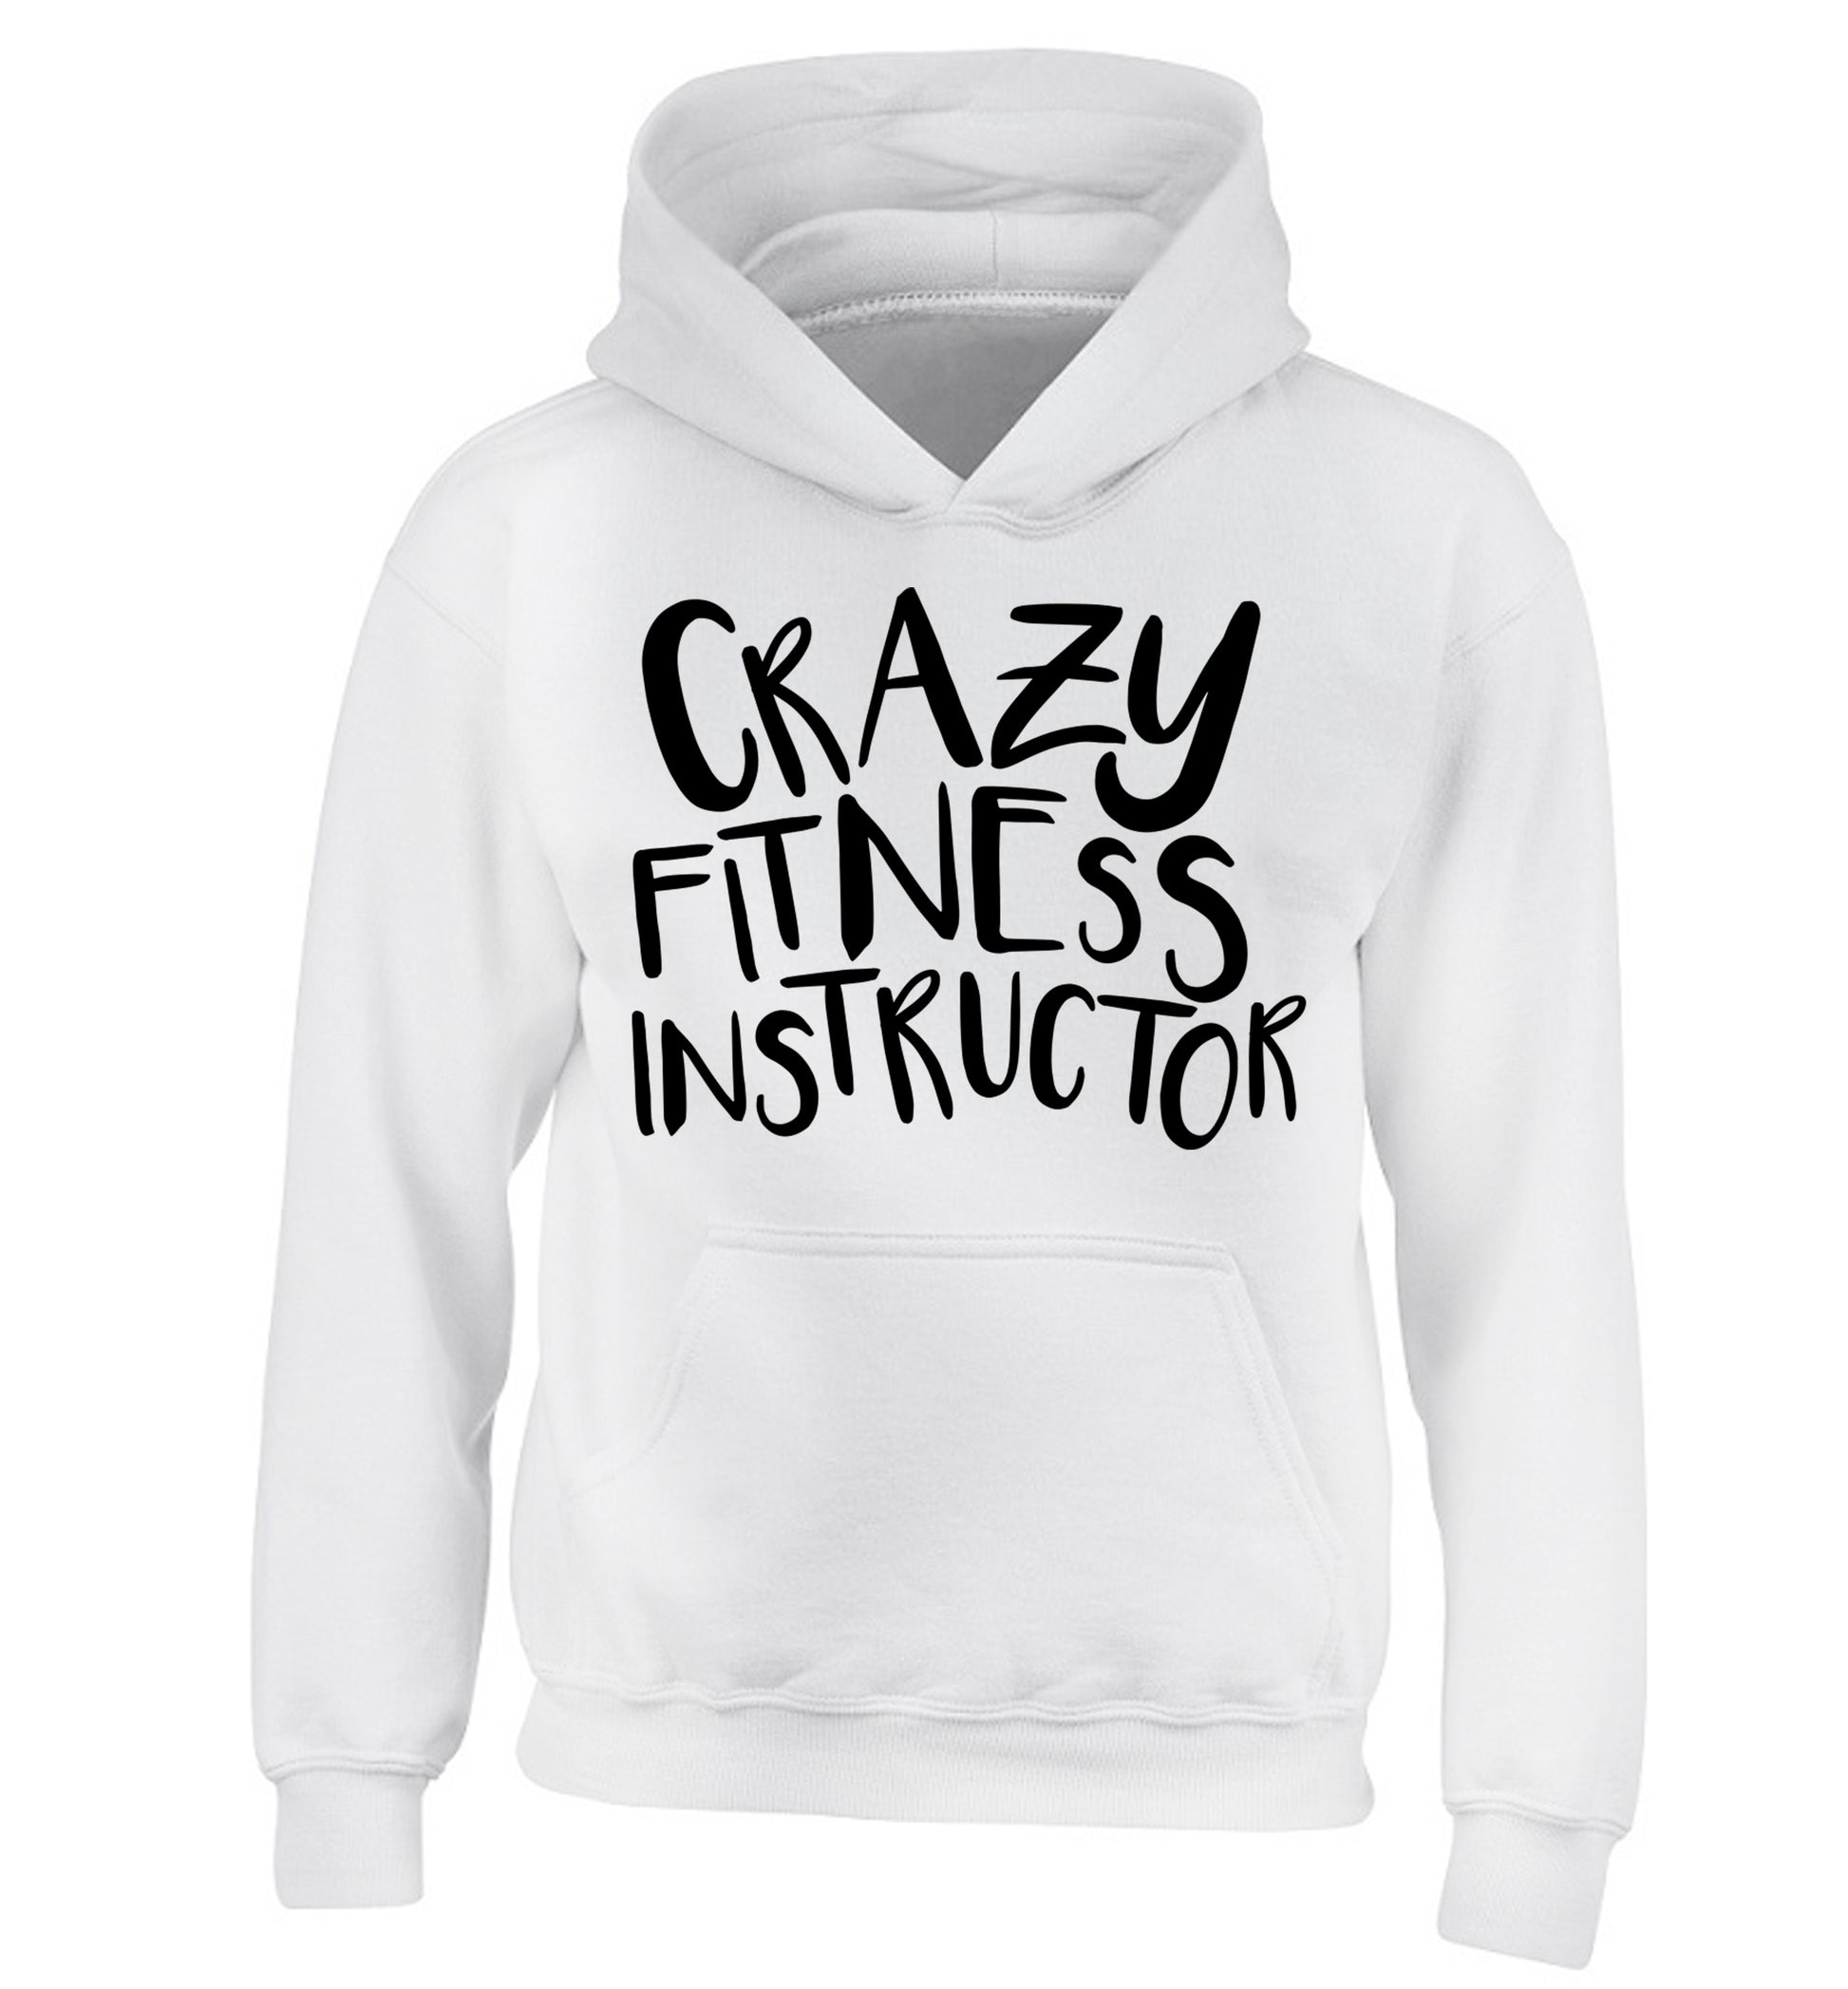 Crazy fitness instructor children's white hoodie 12-13 Years